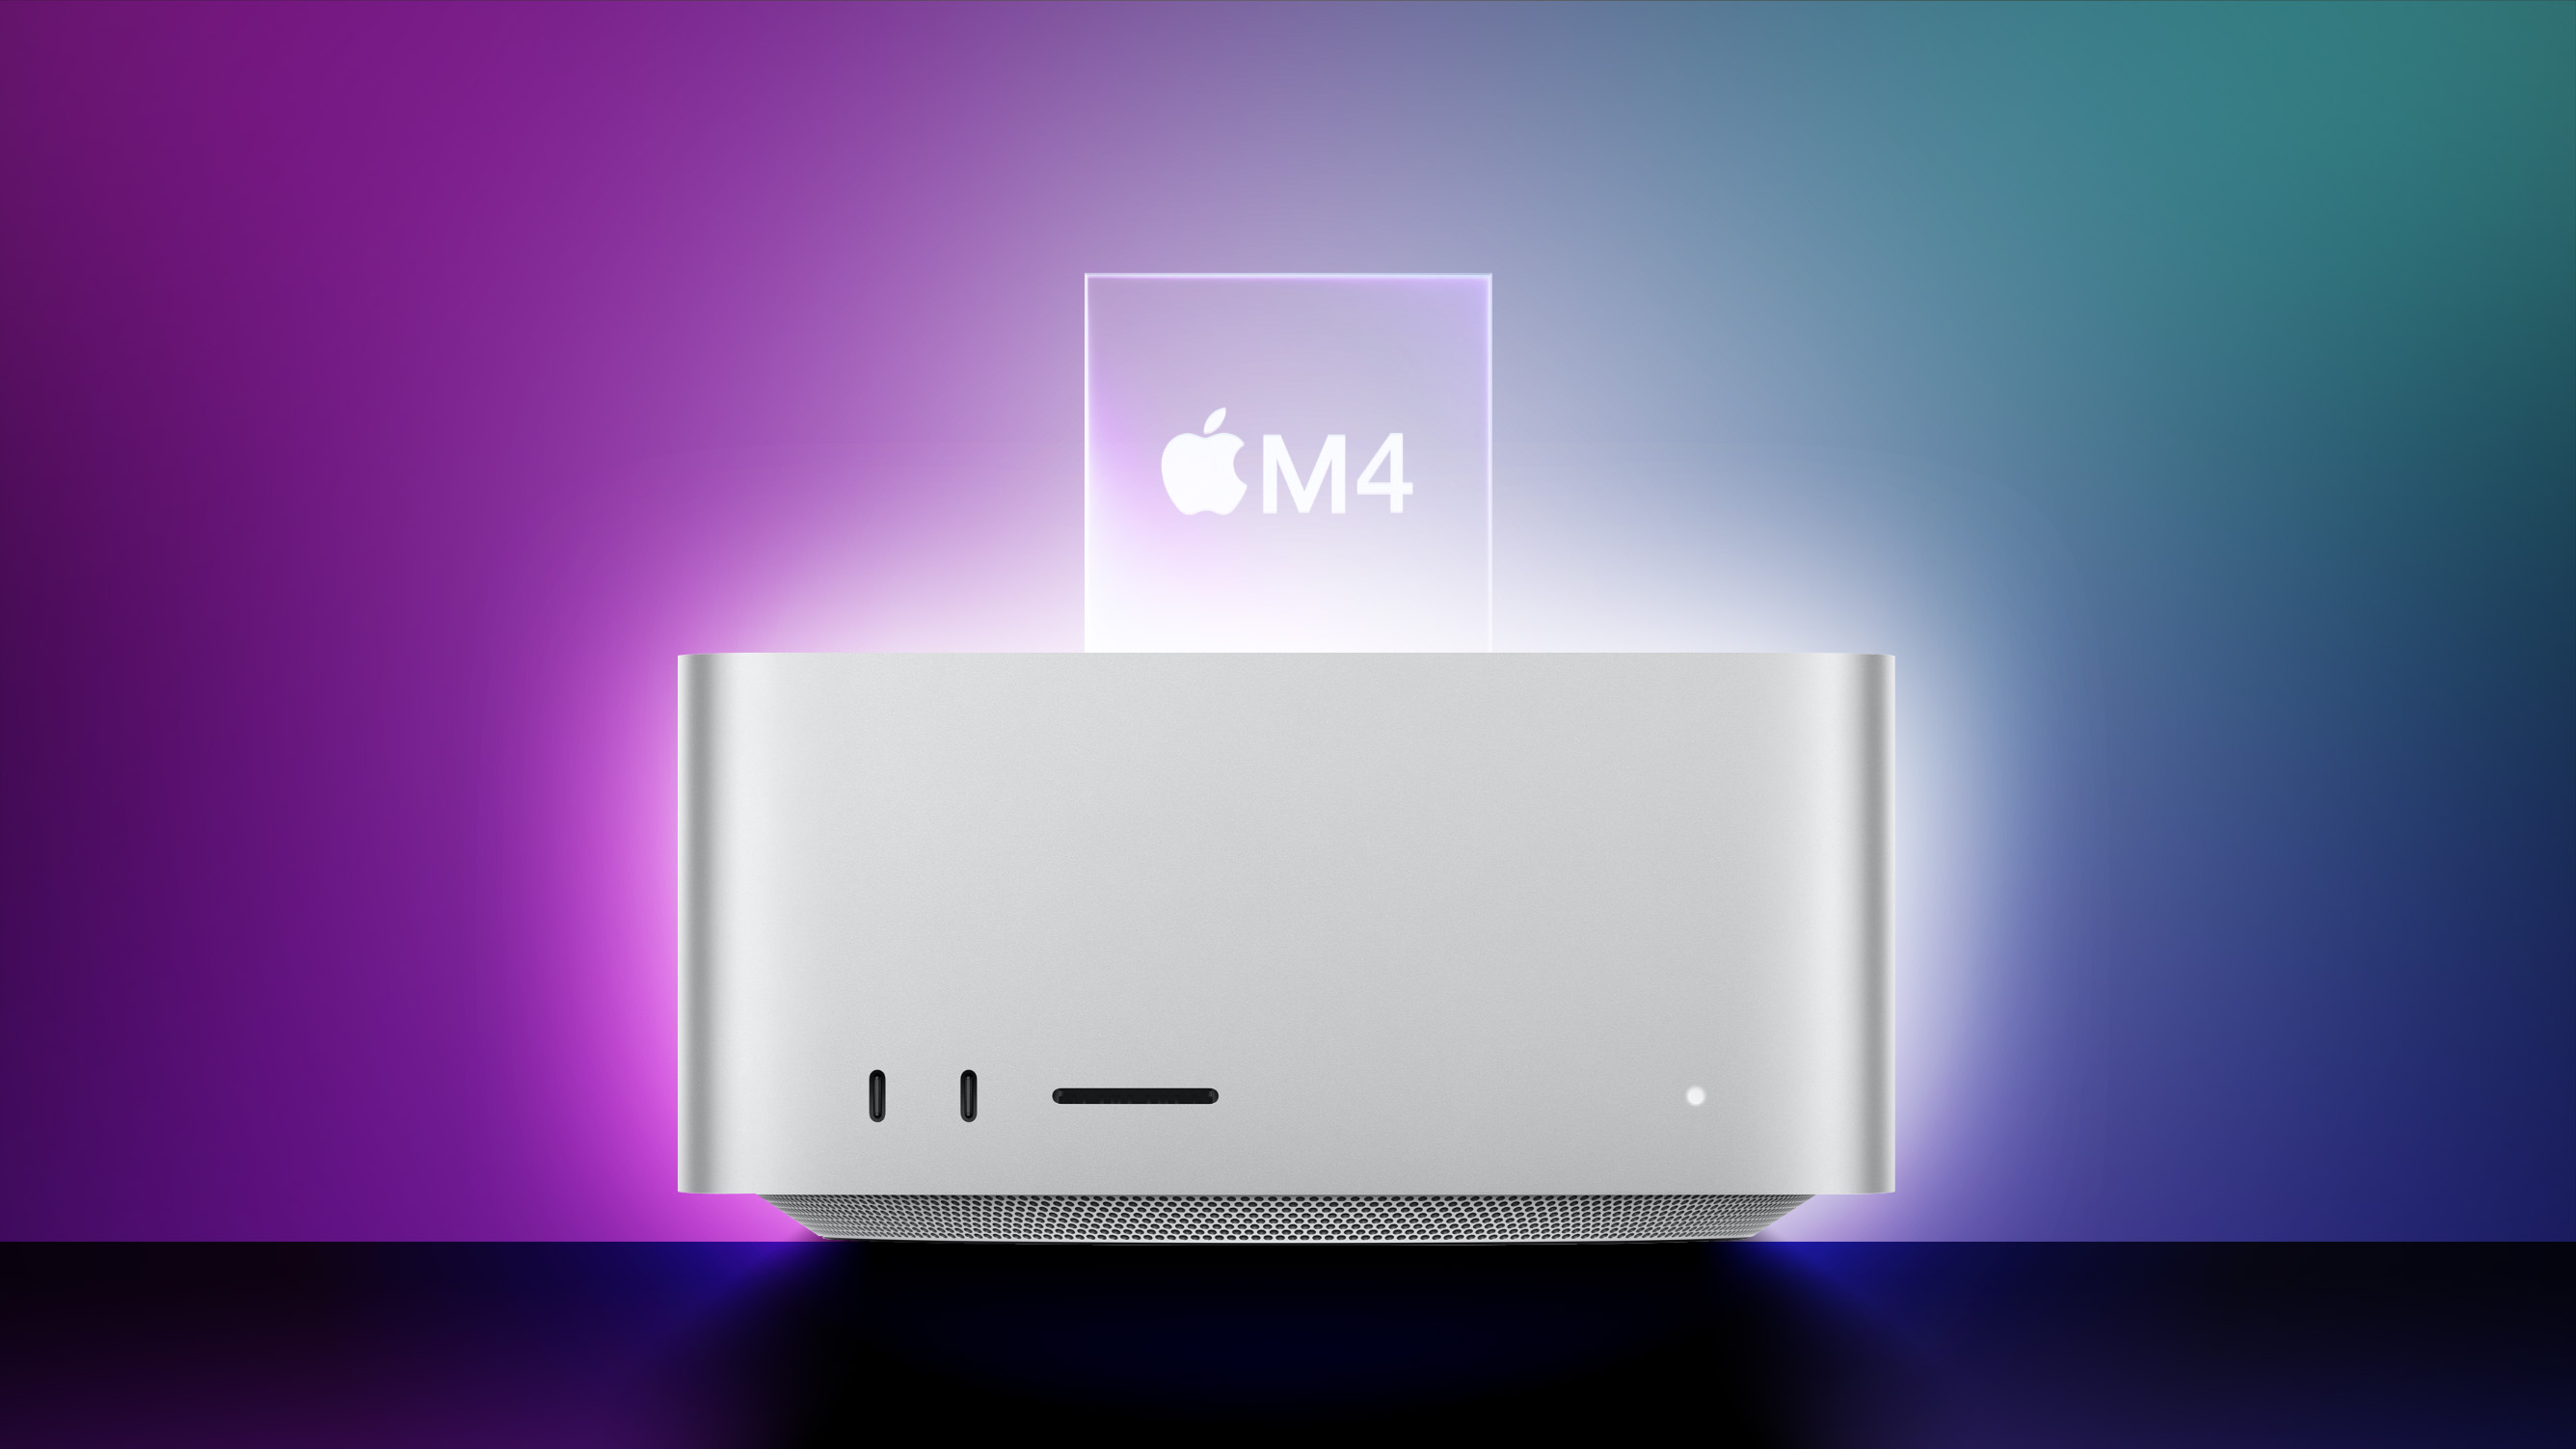 Apple's M4 Mac Studio: What We Know So Far